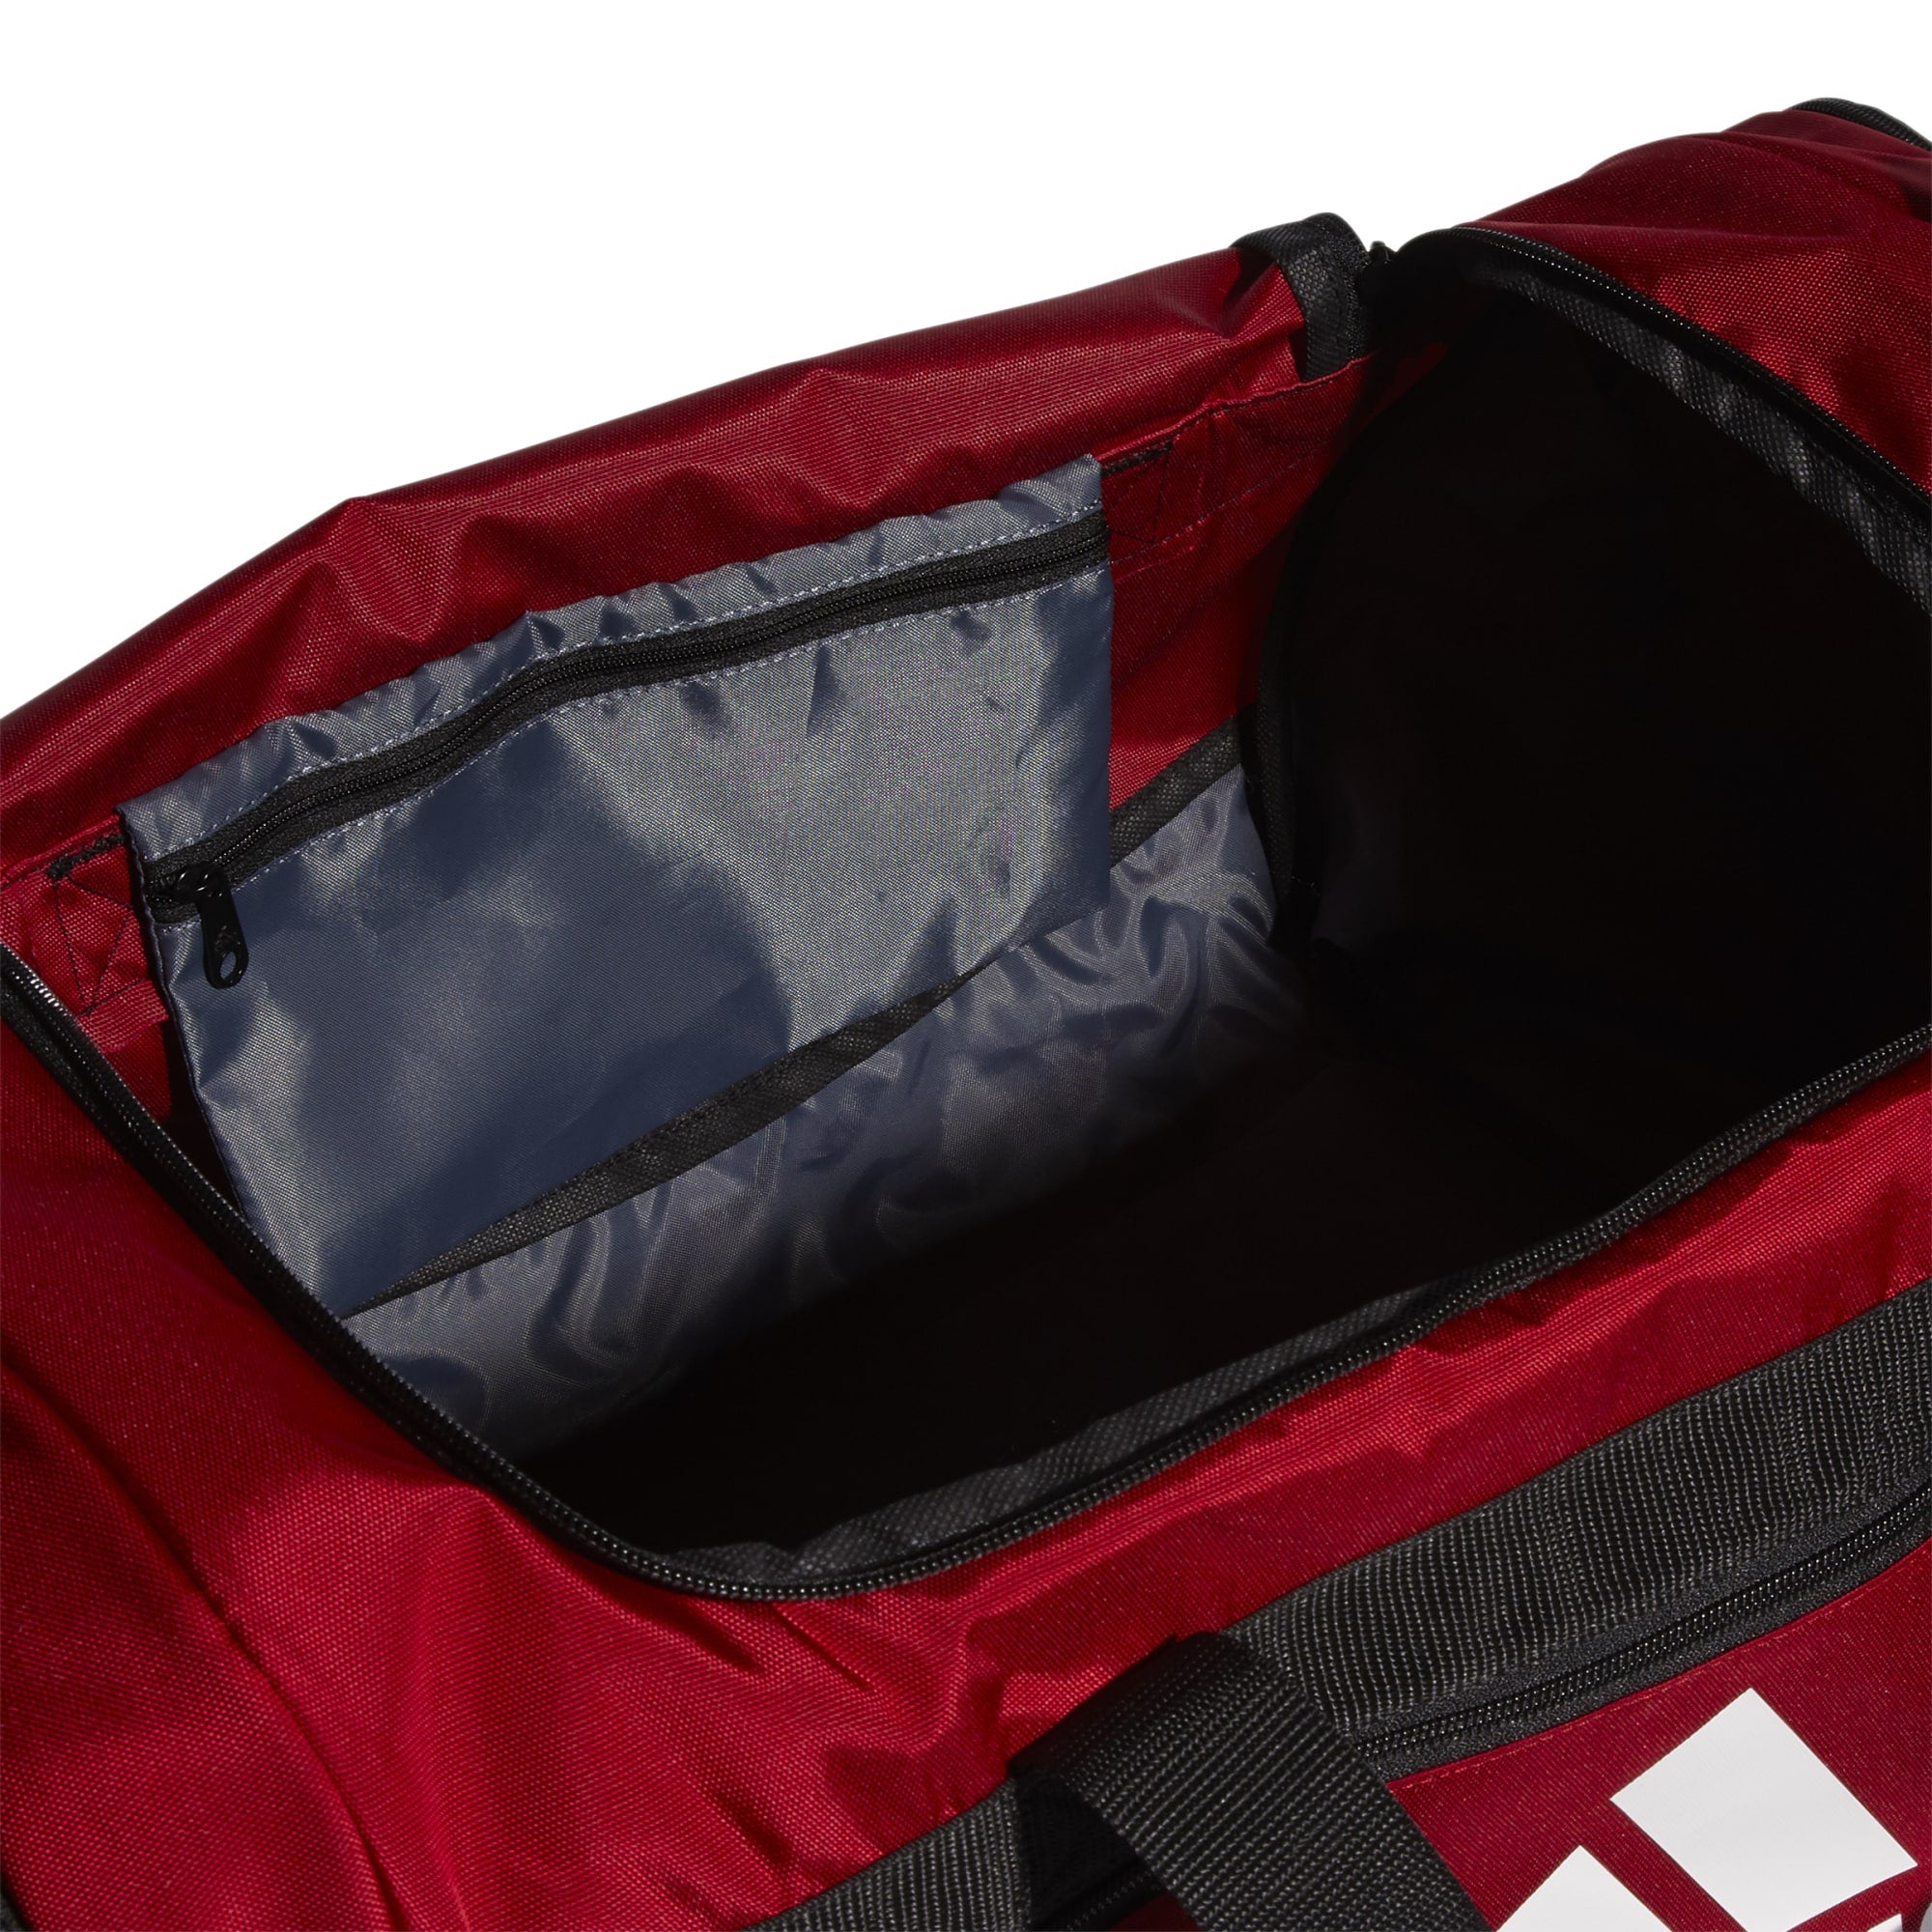 Adidas Defender IV Small Duffel Bag Navy